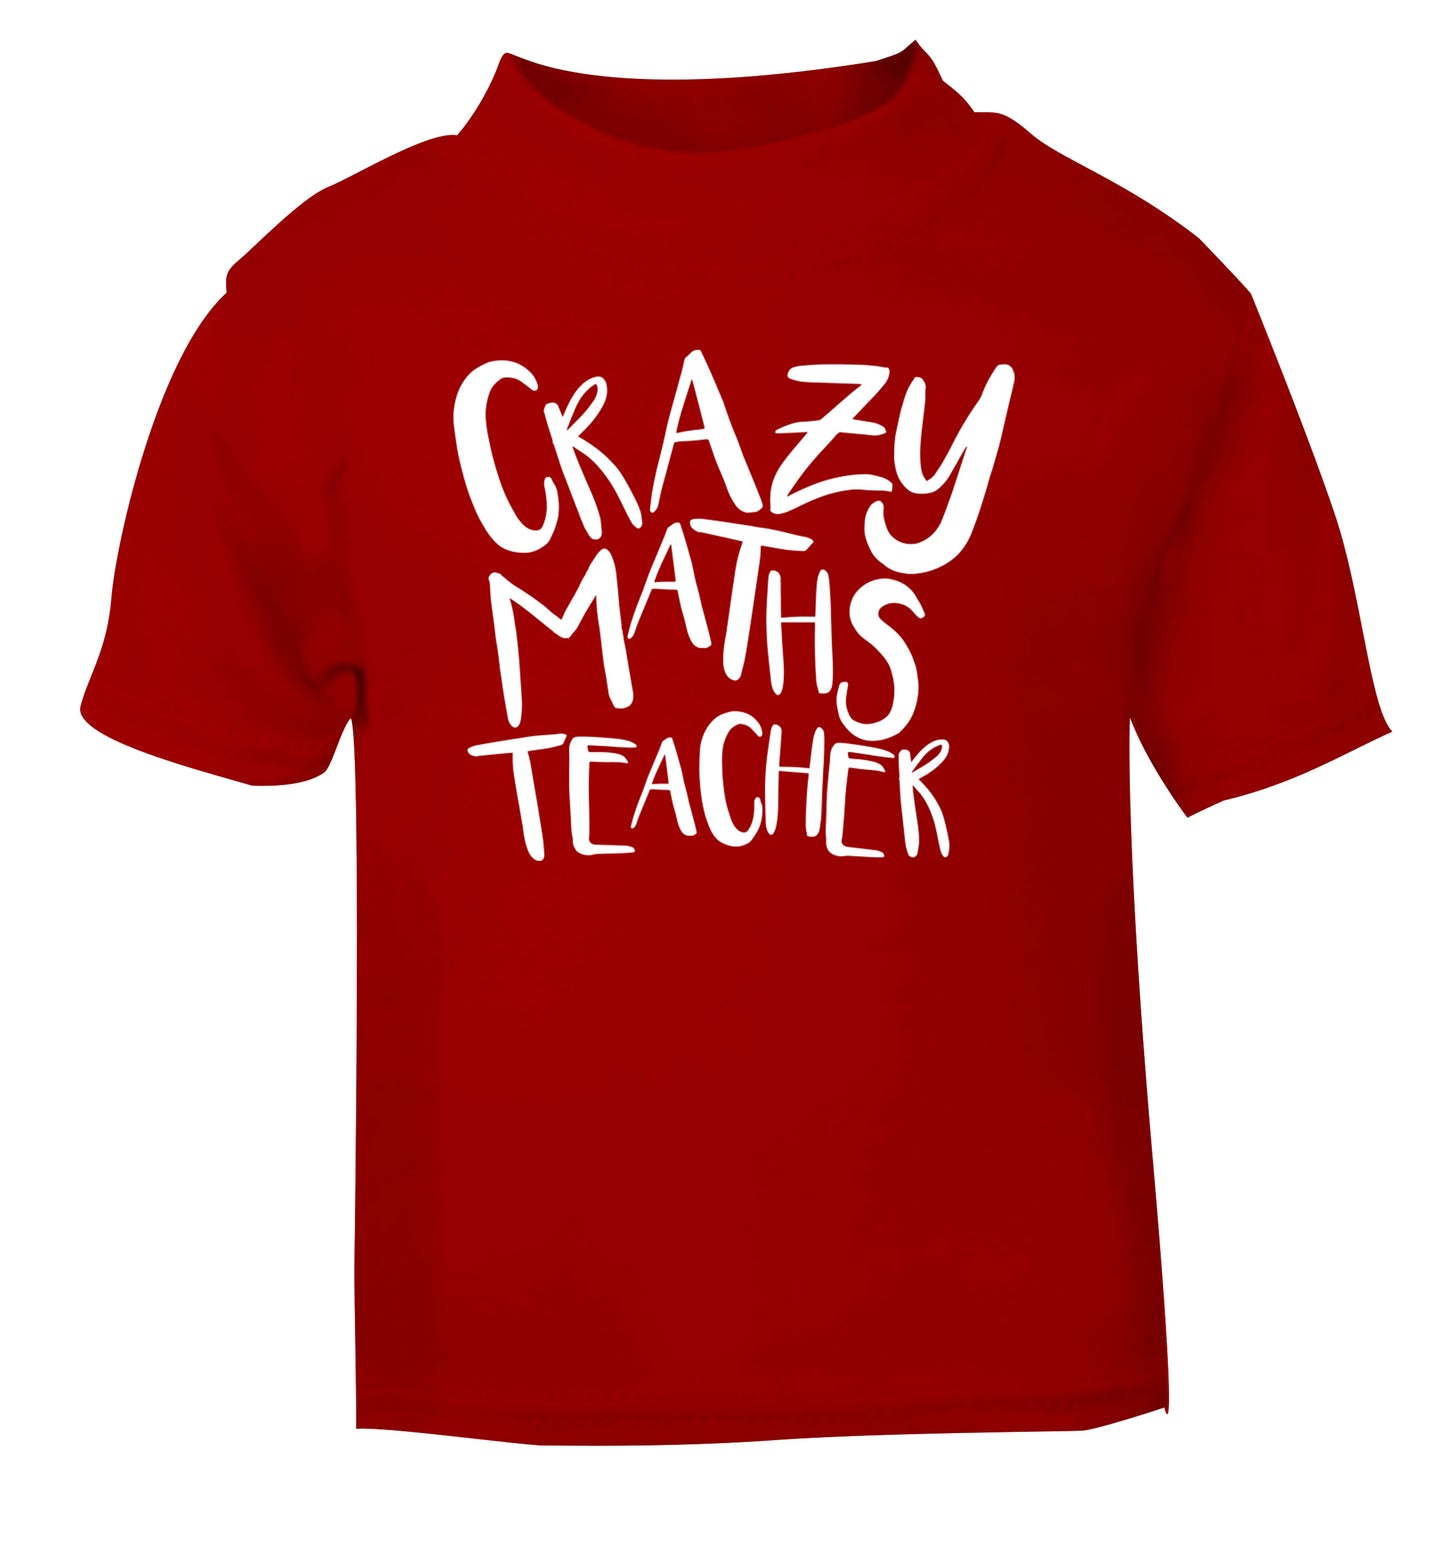 Crazy maths teacher red Baby Toddler Tshirt 2 Years